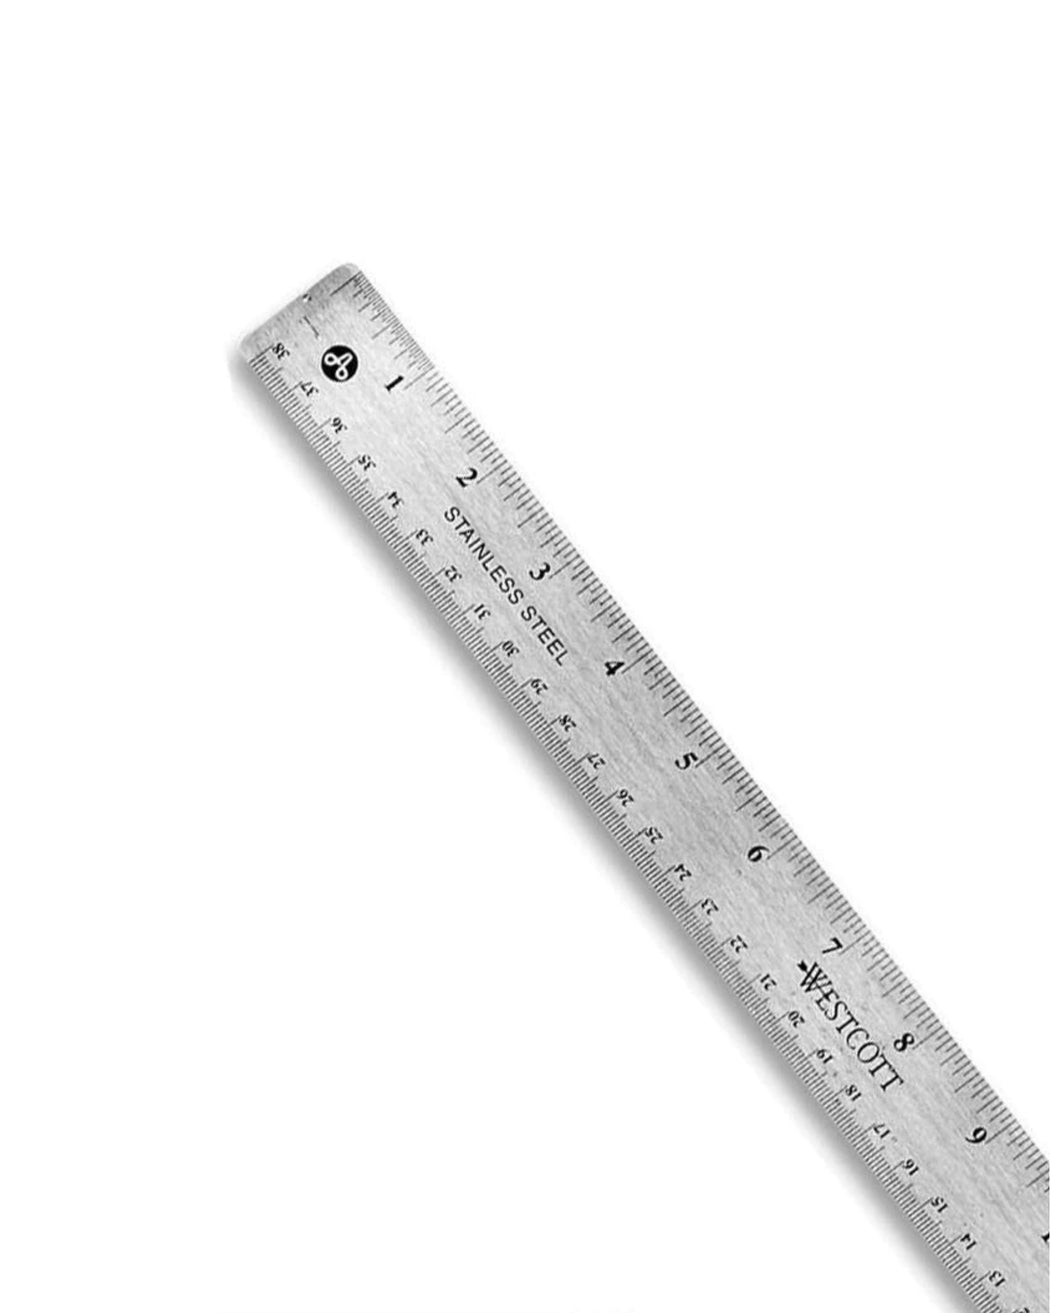 Fairgate Aluminum Straight Edge Ruler - 30